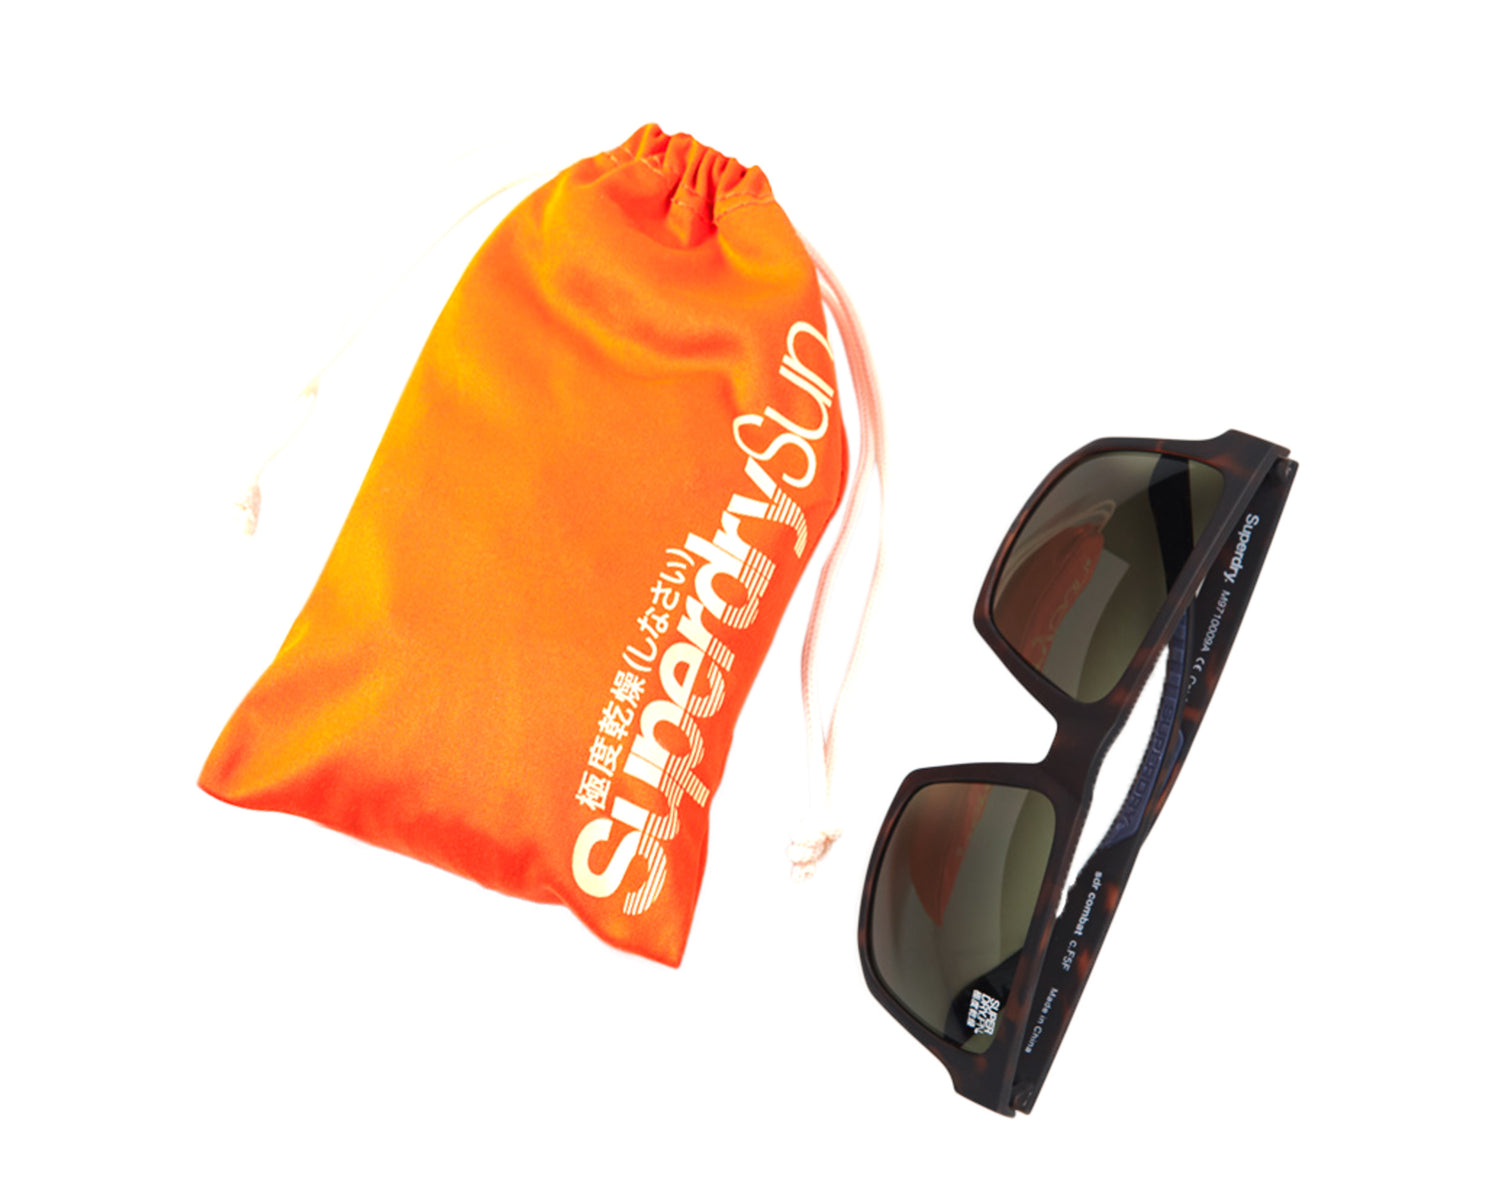 Superdry SDR Combat Sunglasses